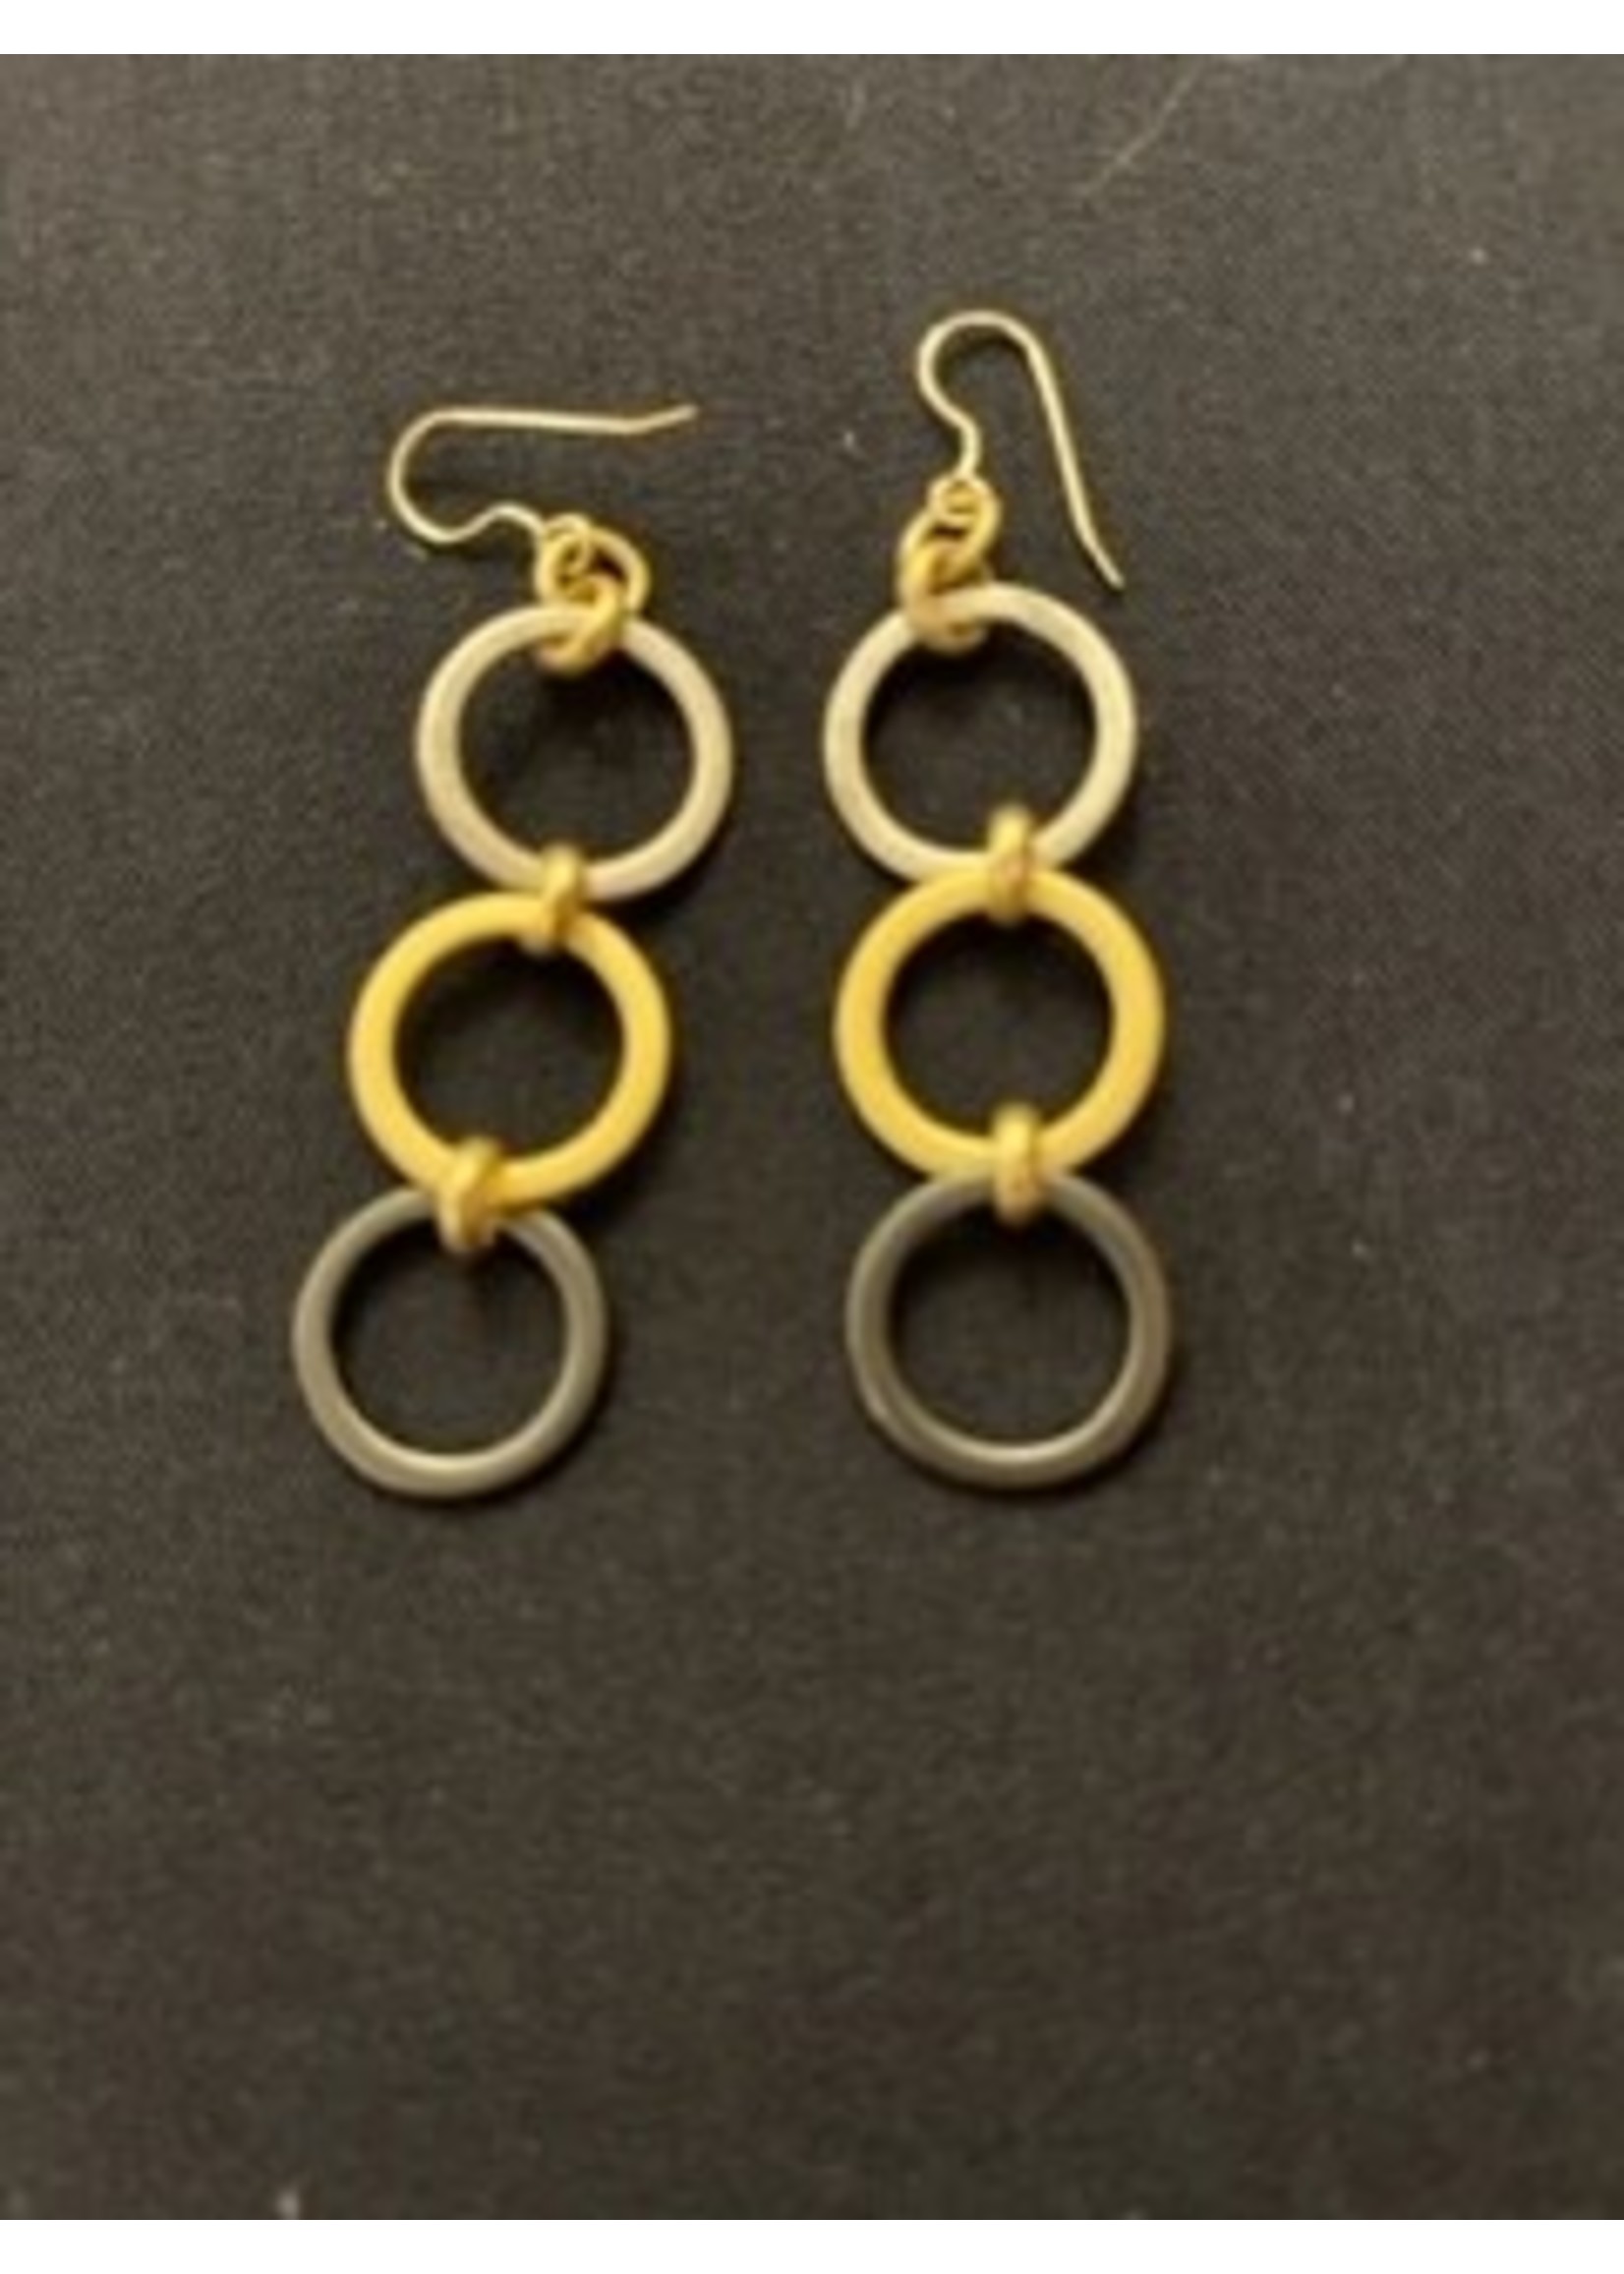 LJ Sonder Max Earrings of silver/gold/black circles